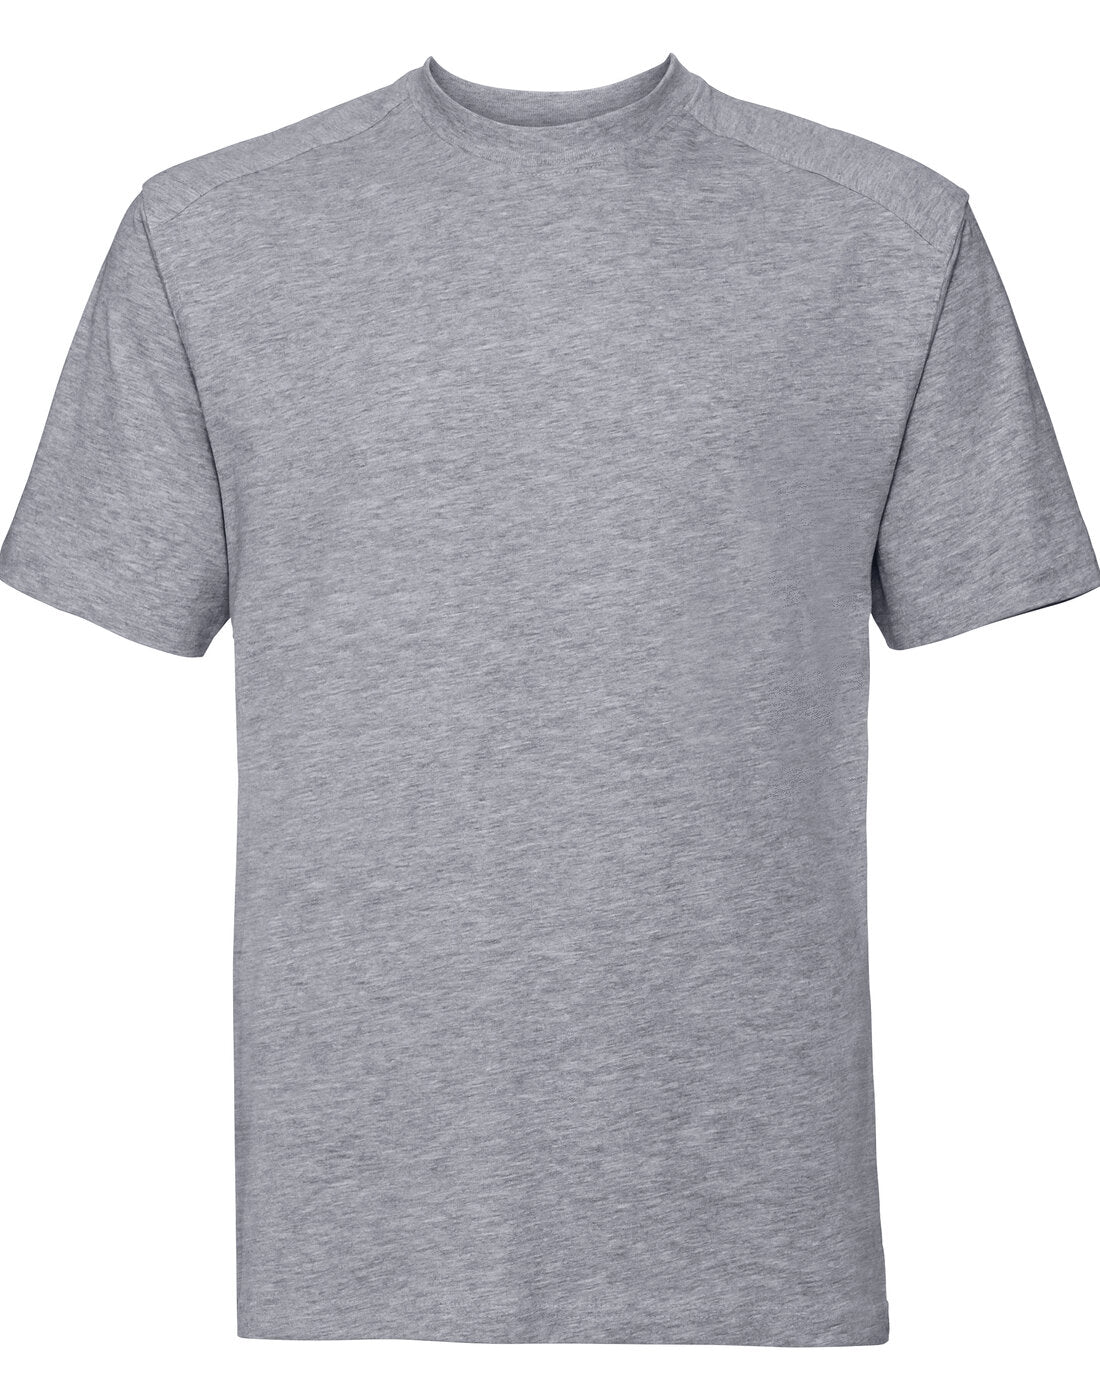 Russell Heavy Duty Workwear T-Shirt - Light Oxford